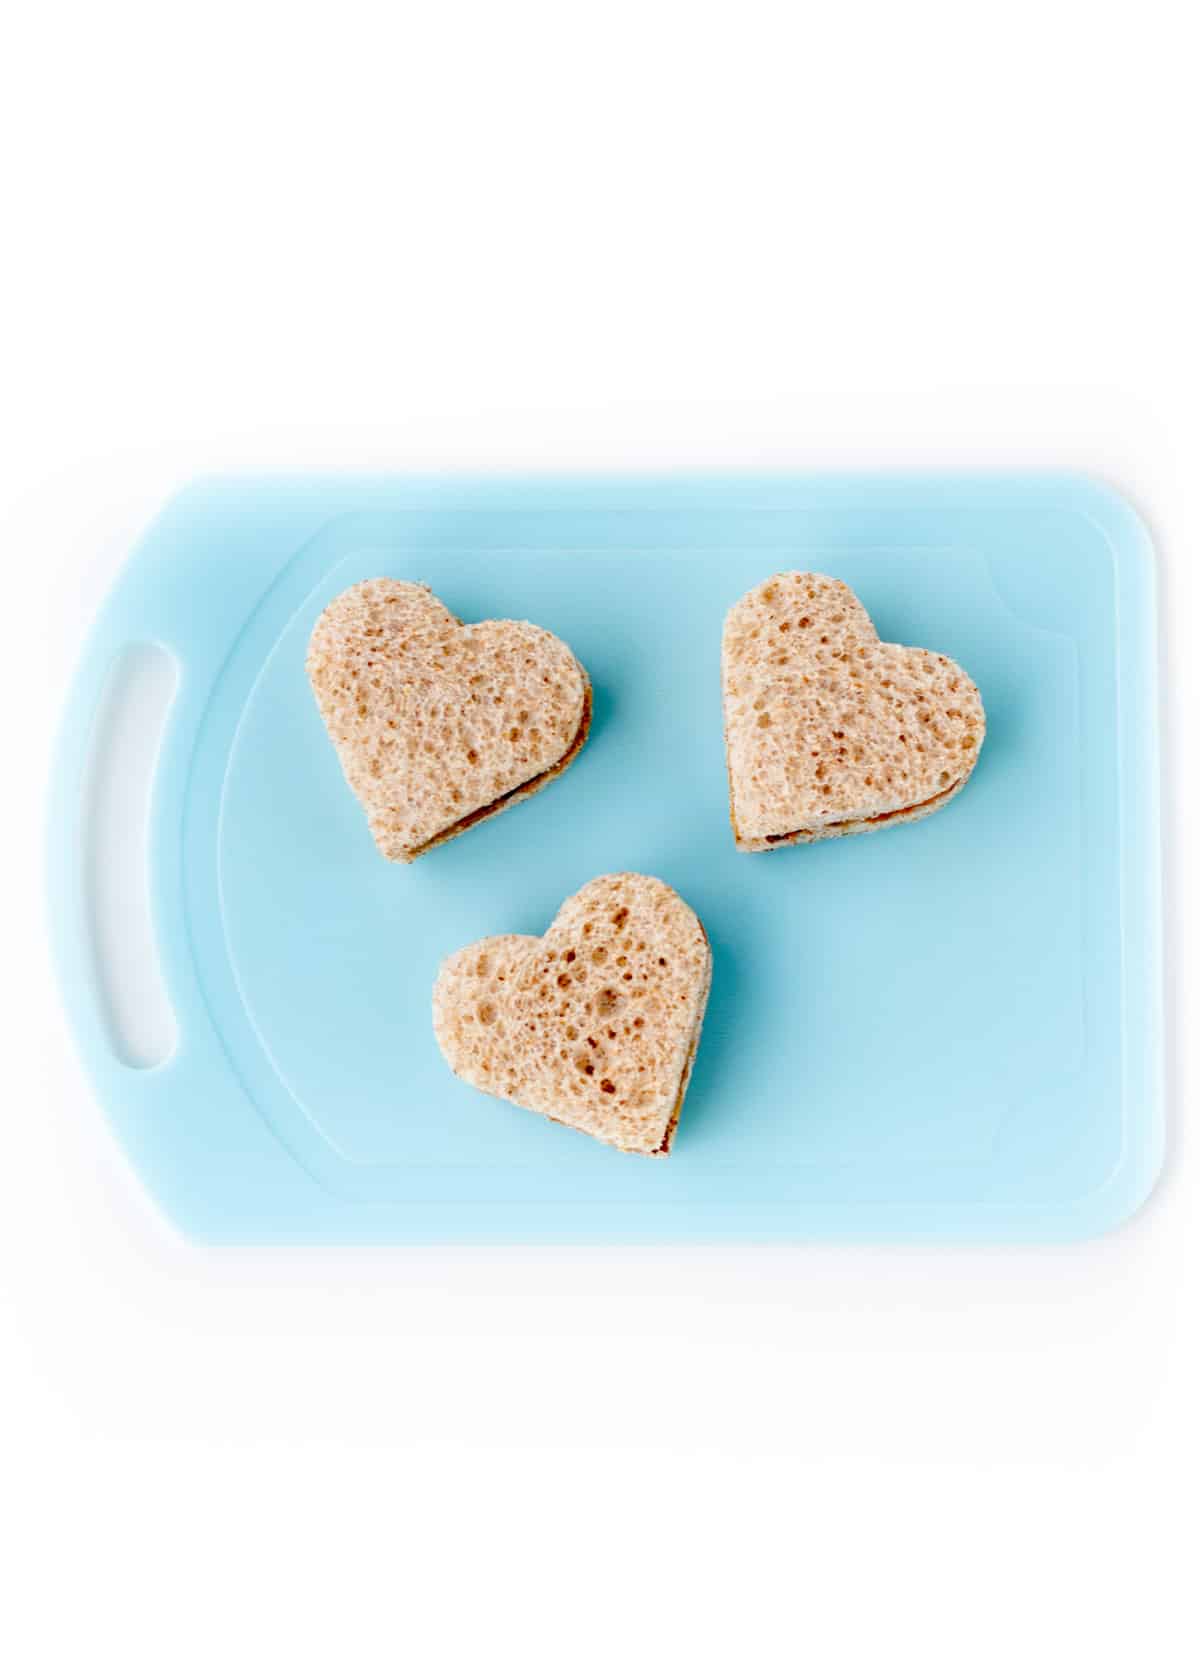 3 heart shaped peanut butter sandwiches on a cutting board.